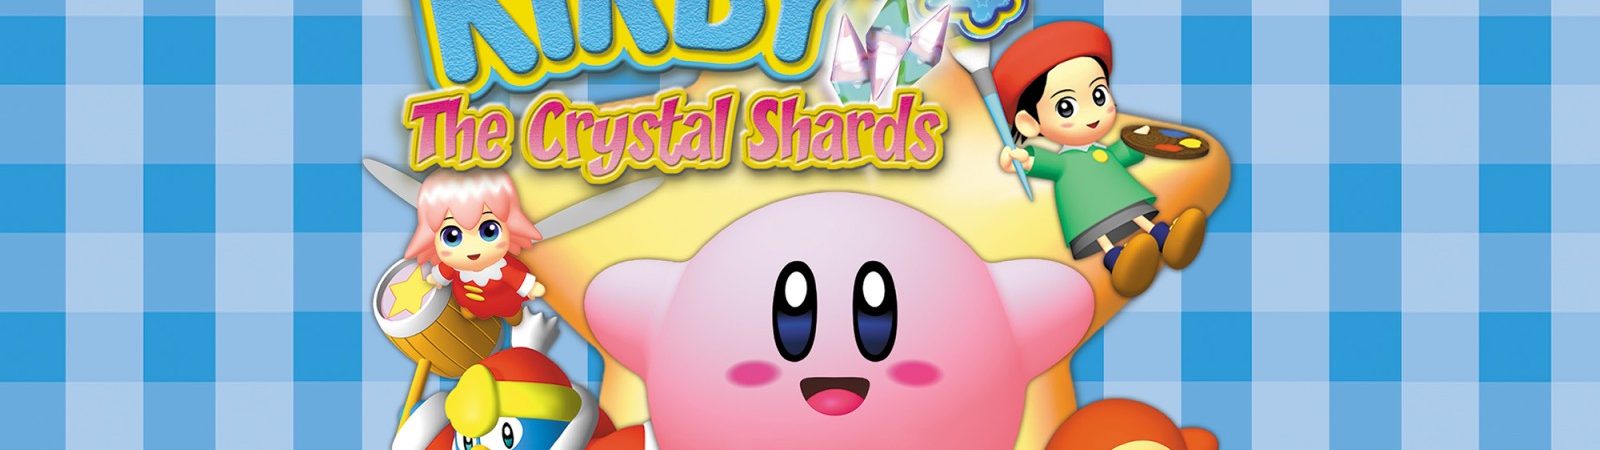 Kirby 64 – The Crystal Shards